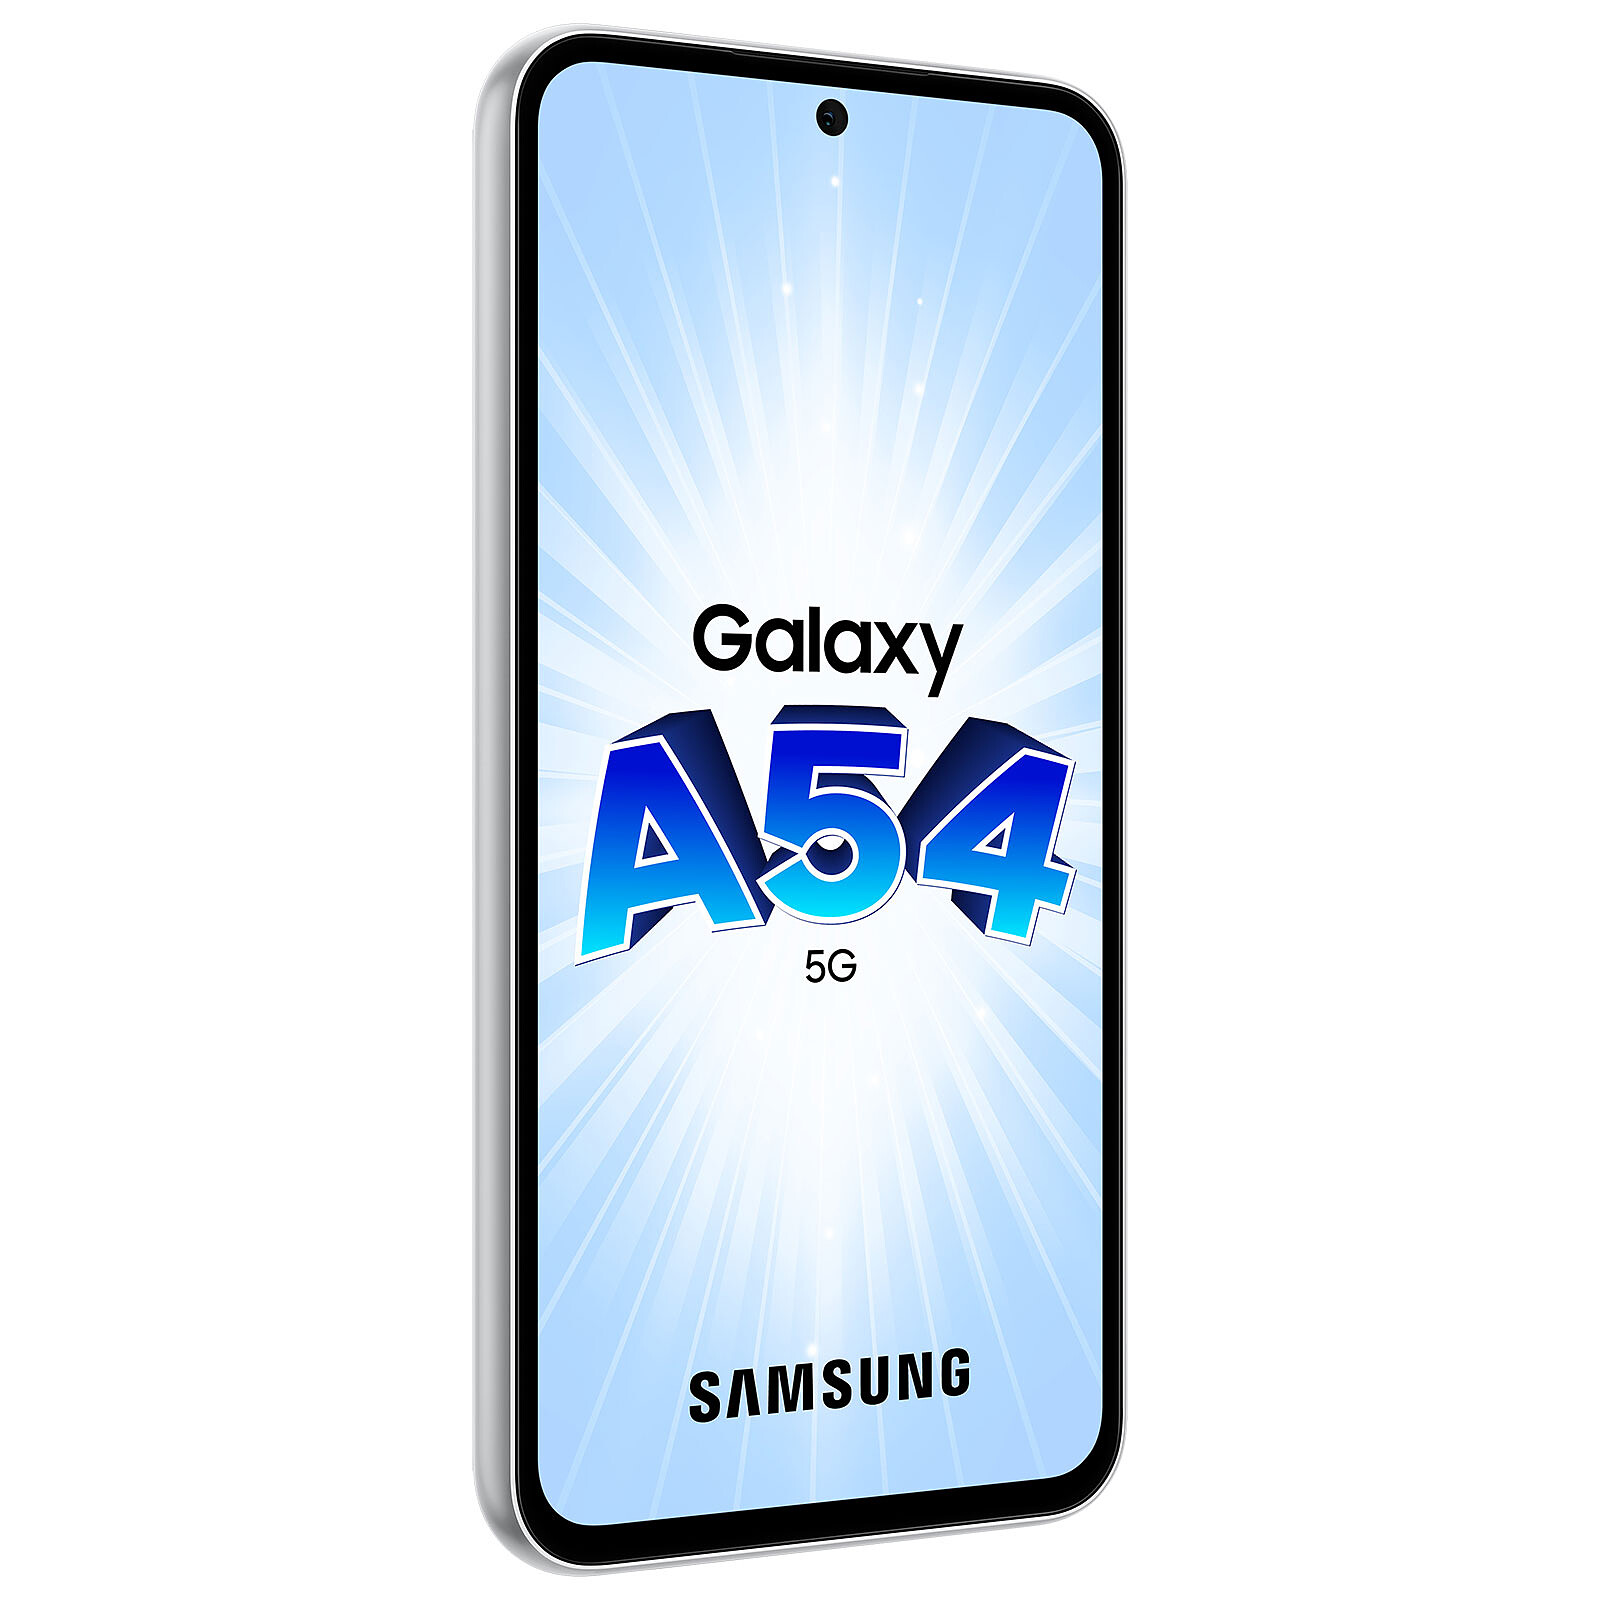 Samsung Galaxy A54 5G Smartphone 128Go Graphite au meilleur prix